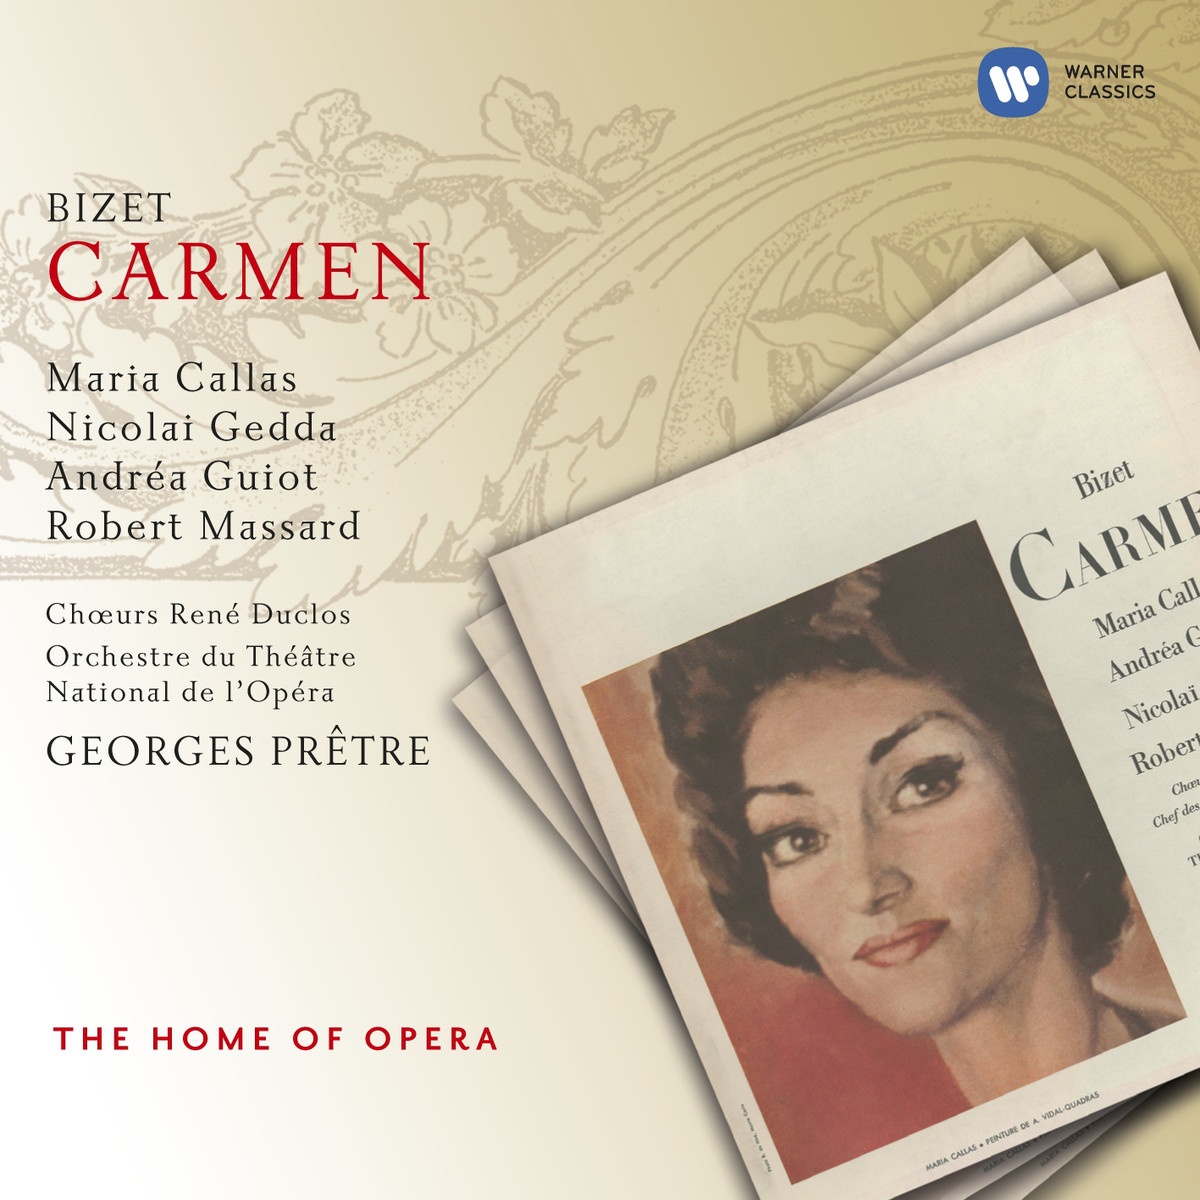 Carmen (1997 Digital Remaster), Act 1: Quels regardes! Quelle effronterie!